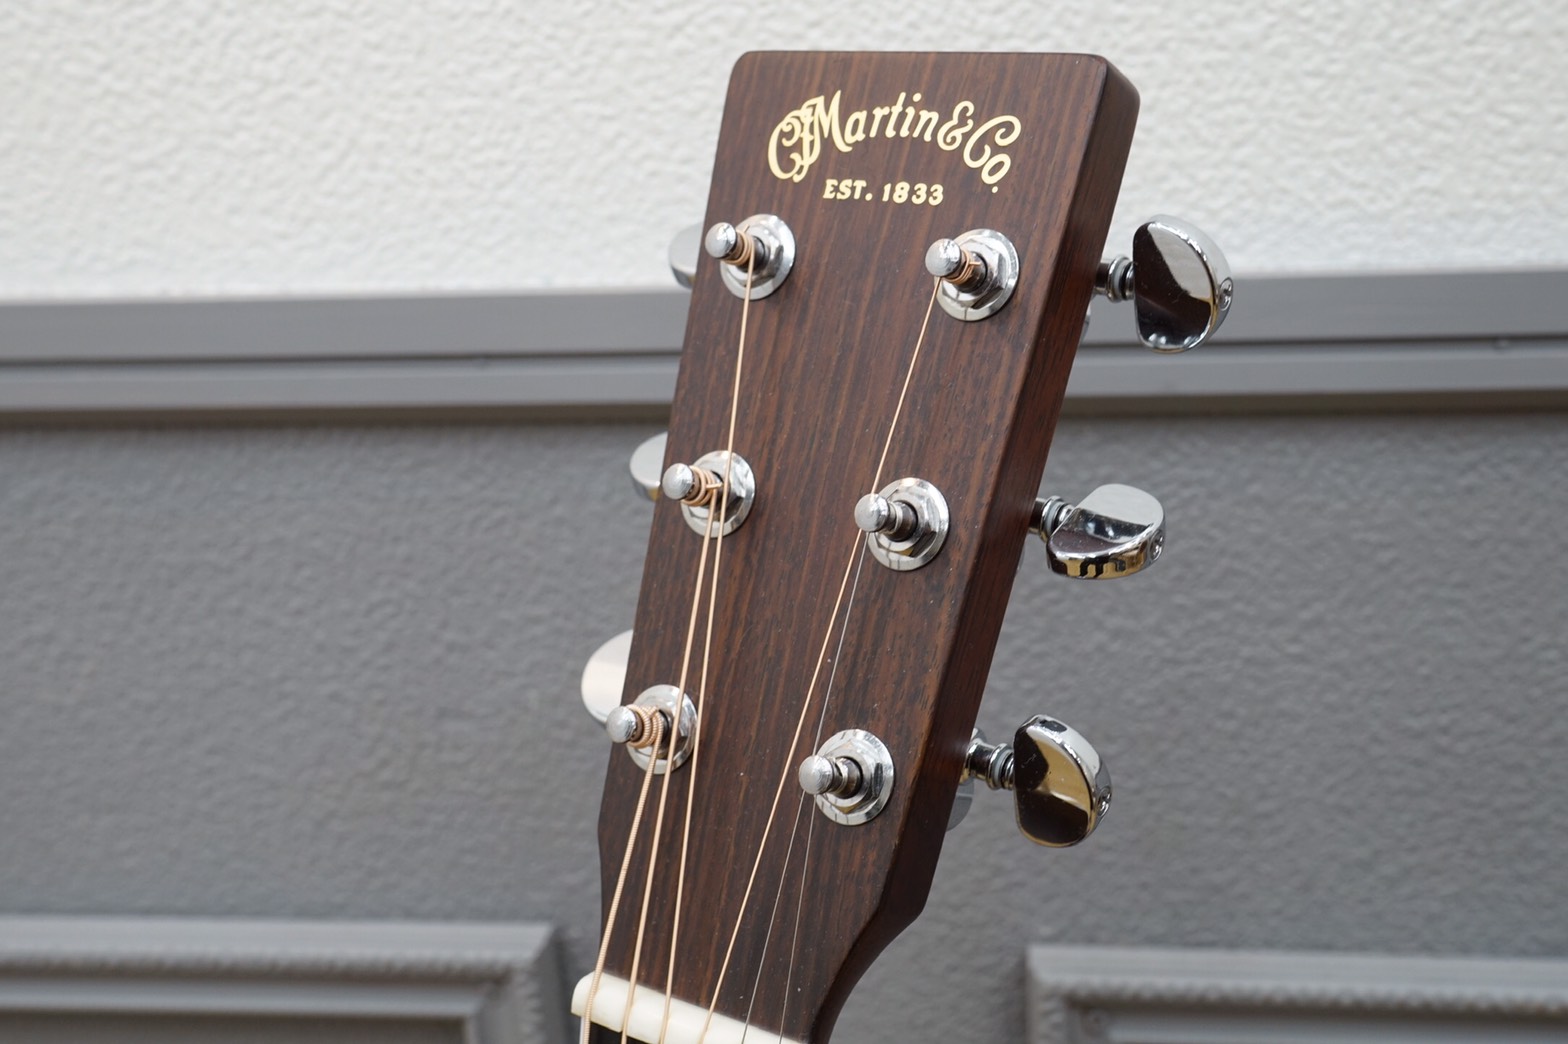 Martinマーチン アコースティックギター D-35 standard model 2016年製造2